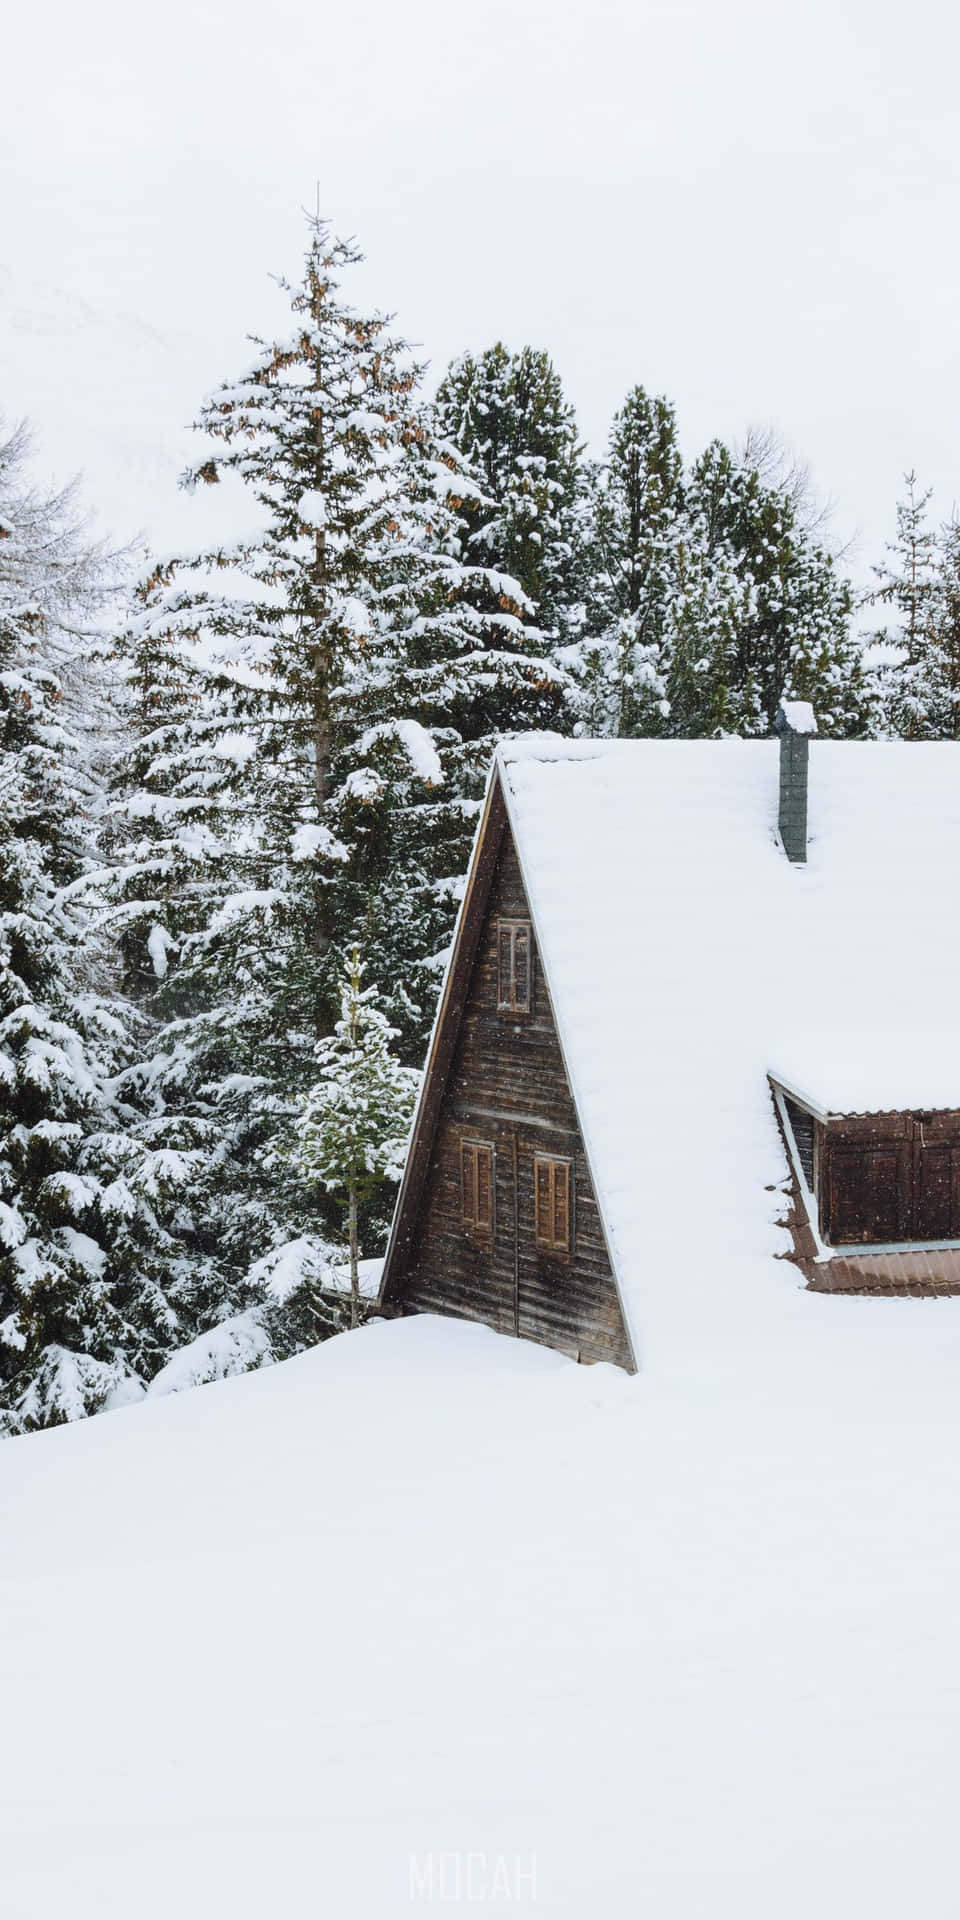 Pixel 3 Winter Background Snowy Cabin Roof